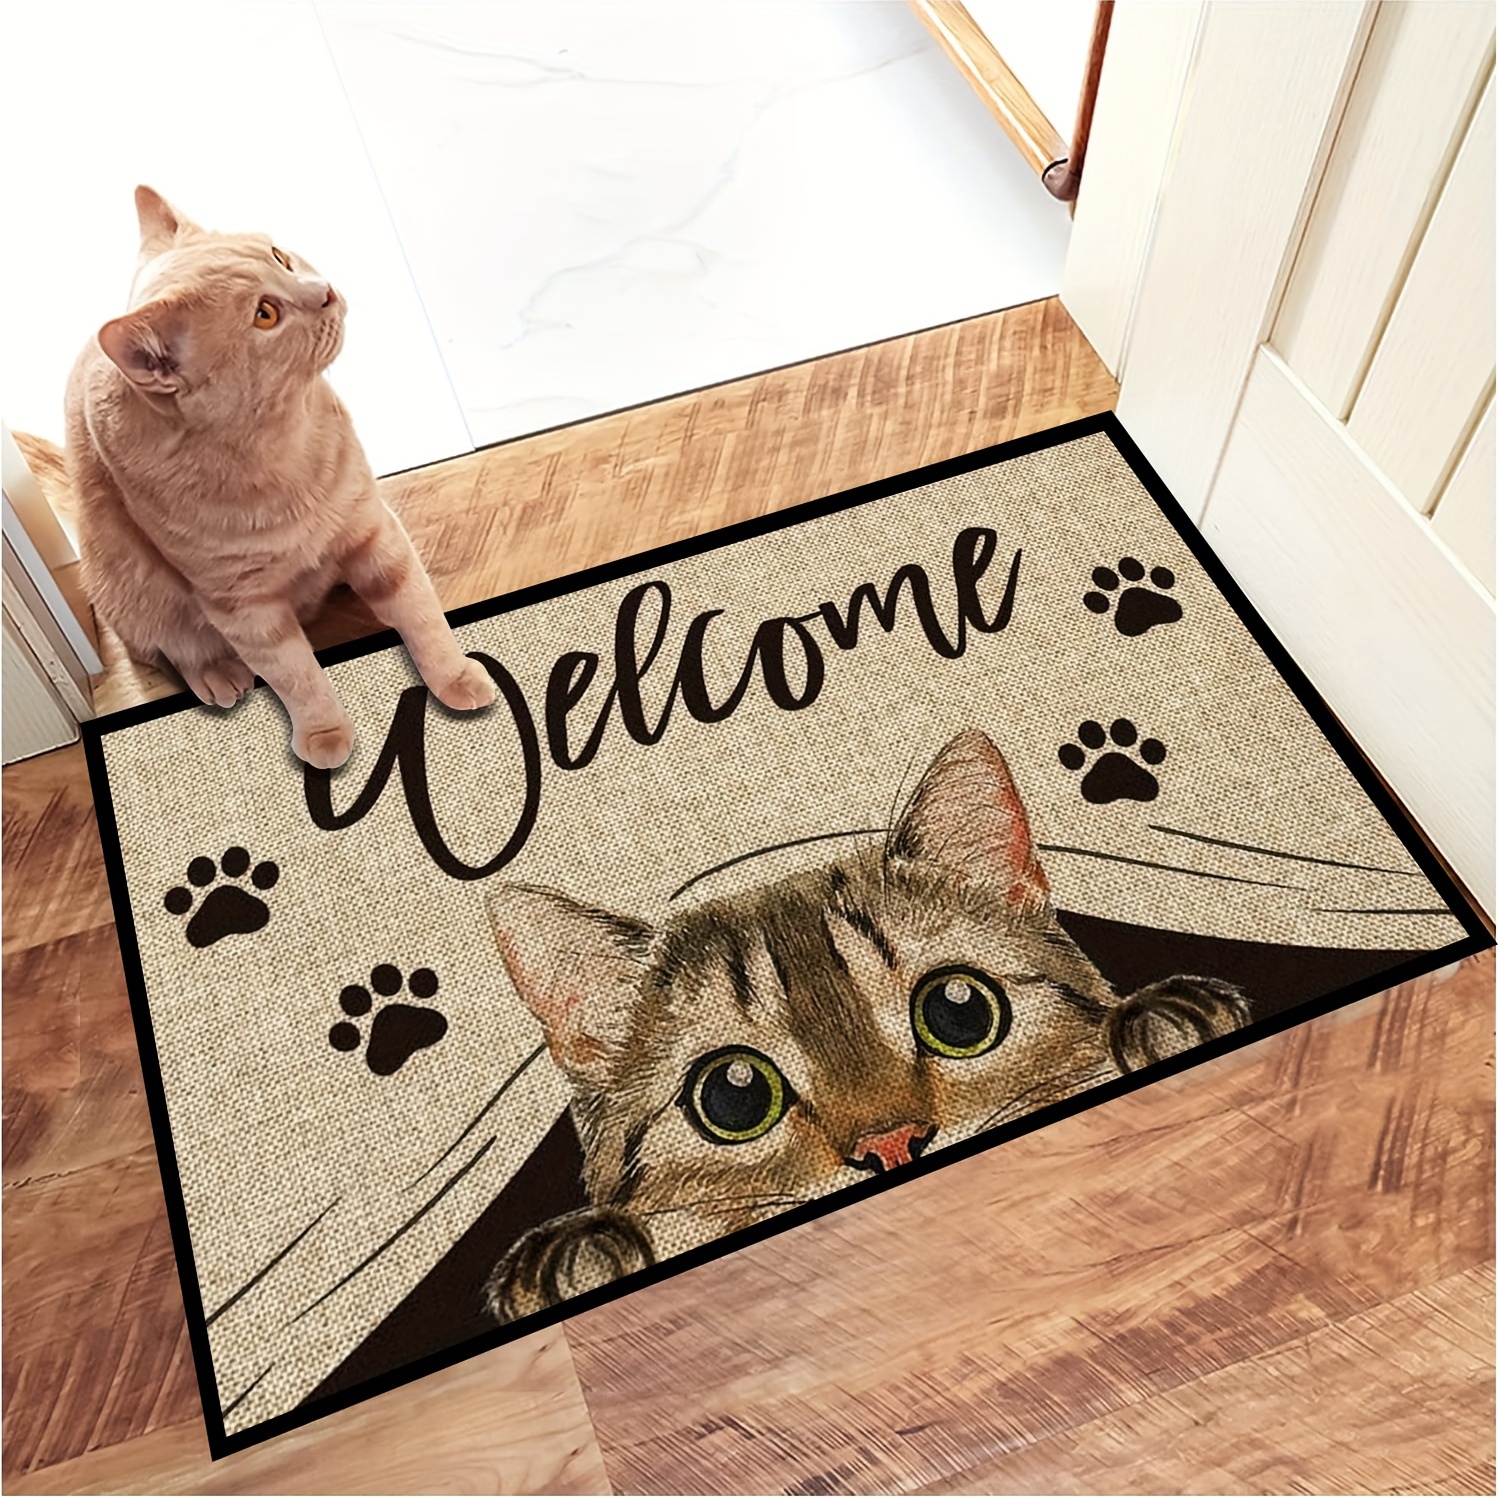 https://img.kwcdn.com/product/cute-cat-print-welcome-doormat/d69d2f15w98k18-d072fb2a/Fancyalgo/VirtualModelMatting/ff72399ff05d2efb4ae68eefebbd8f59.jpg